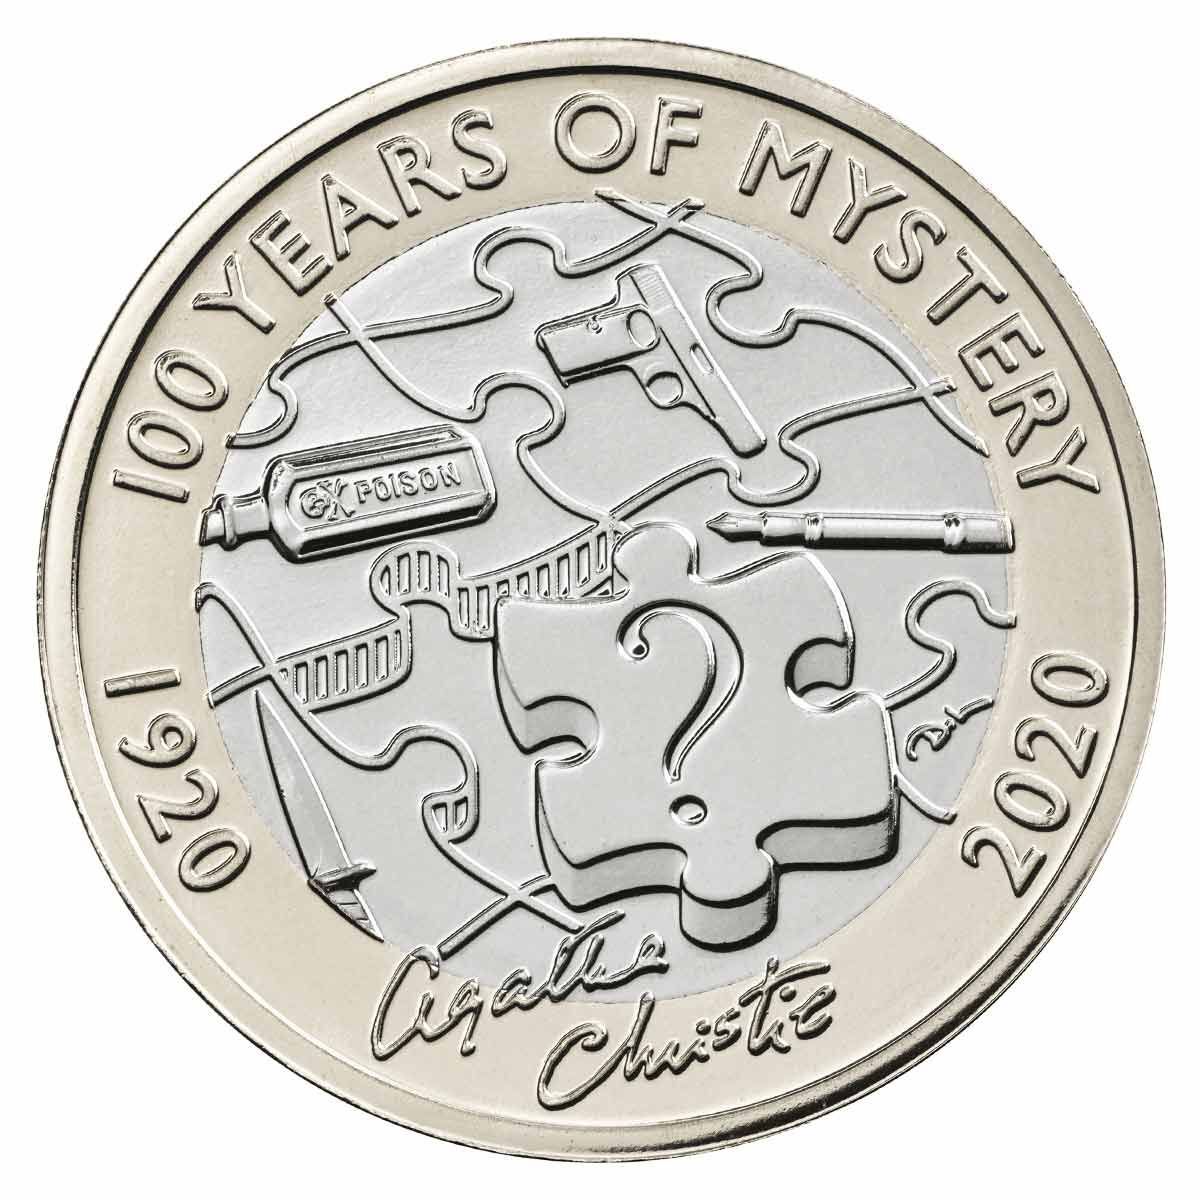 2020 £2 Agatha Christie Brilliant Uncirculated Coin